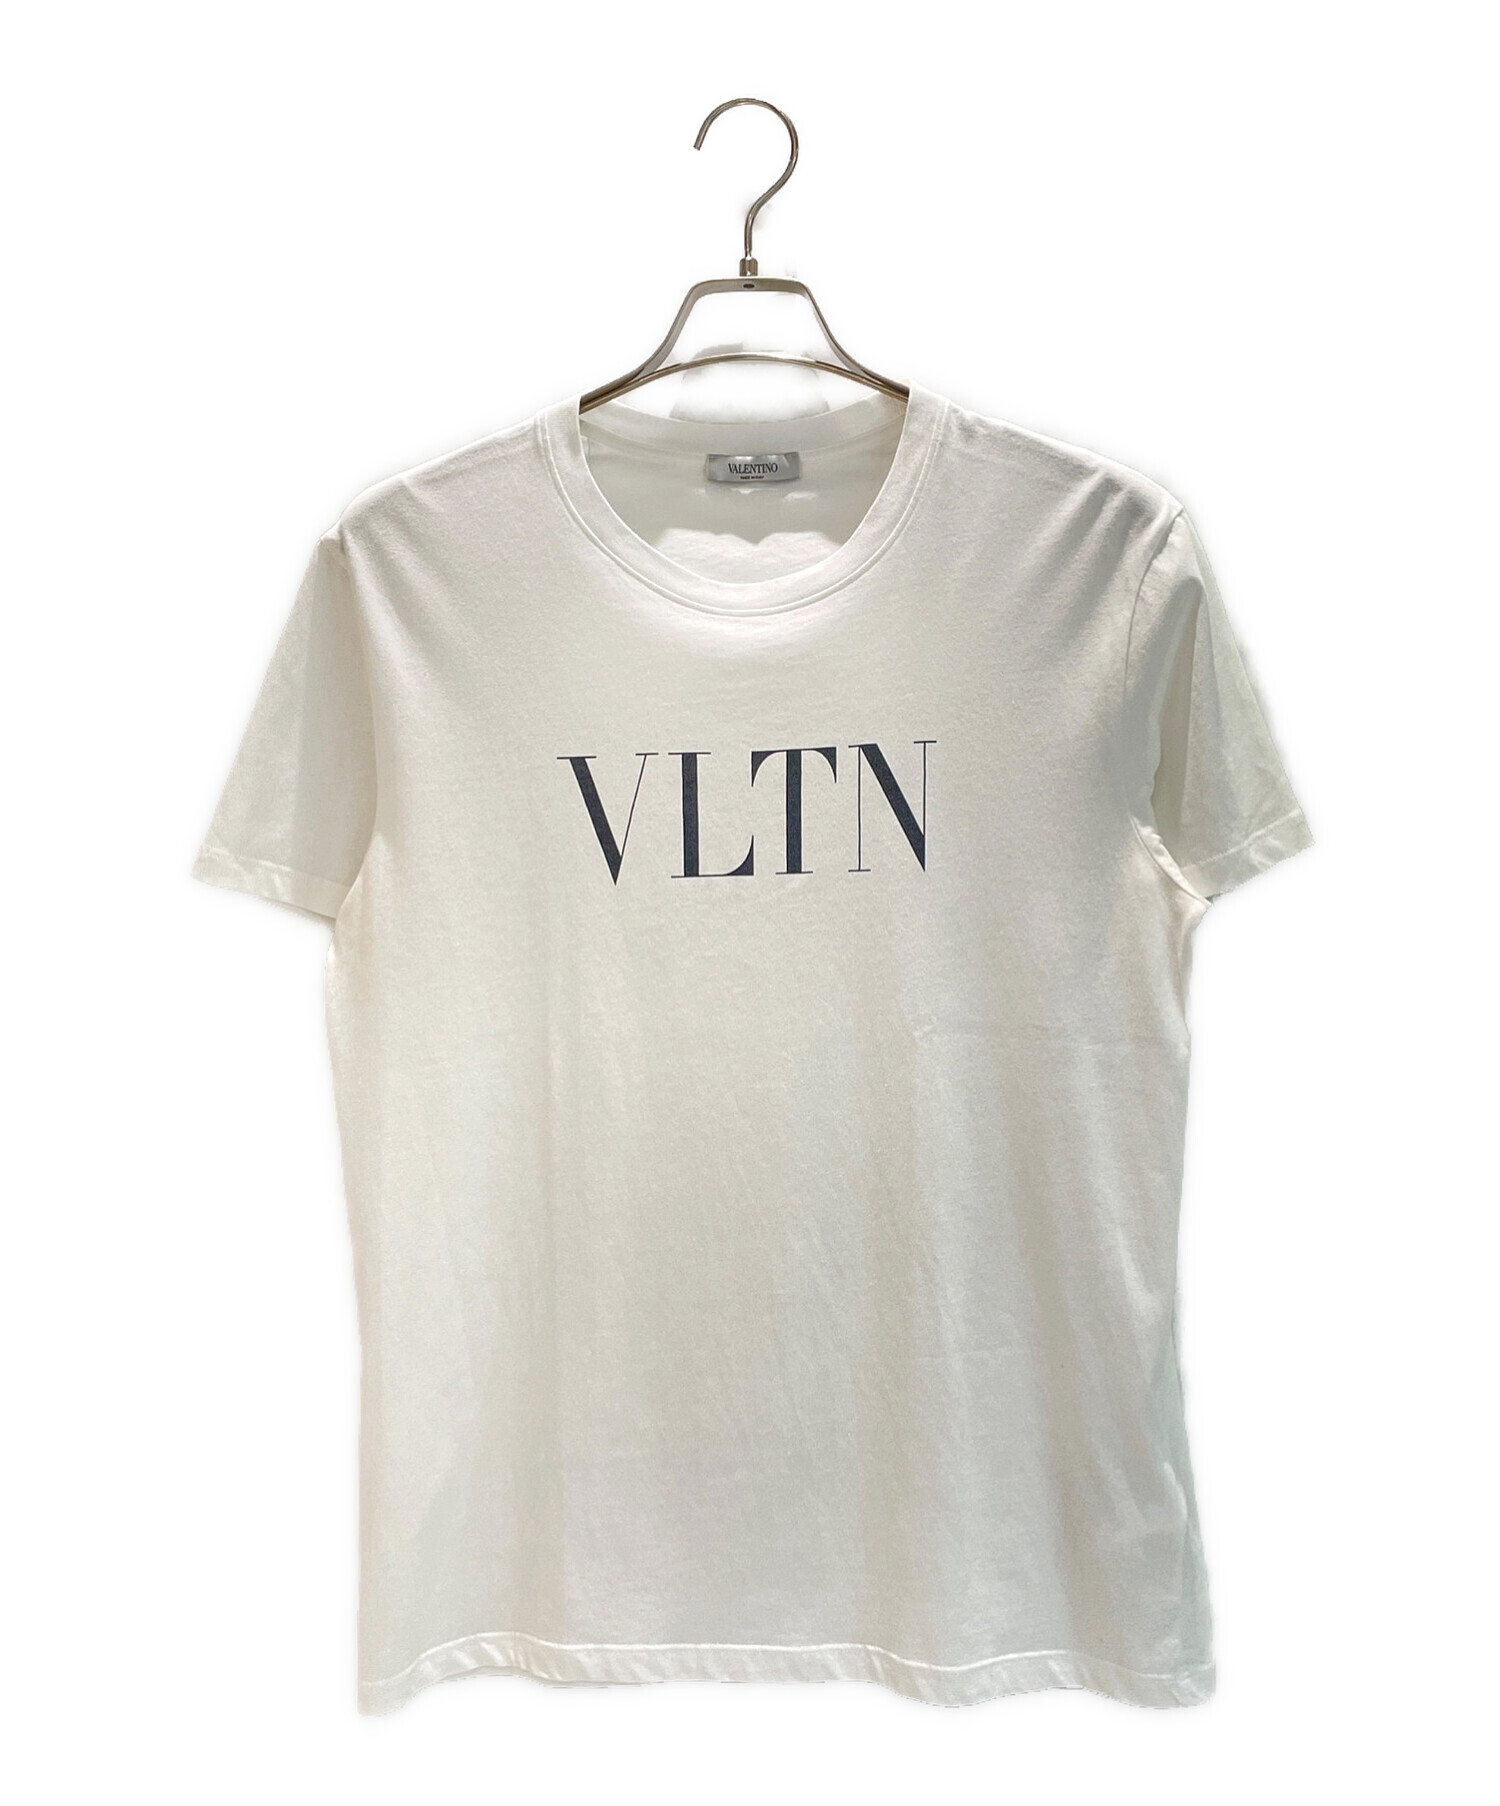 VALENTINO (ヴァレンティノ) VLTN ロゴクルーネック Tシャツ ホワイト サイズ:S